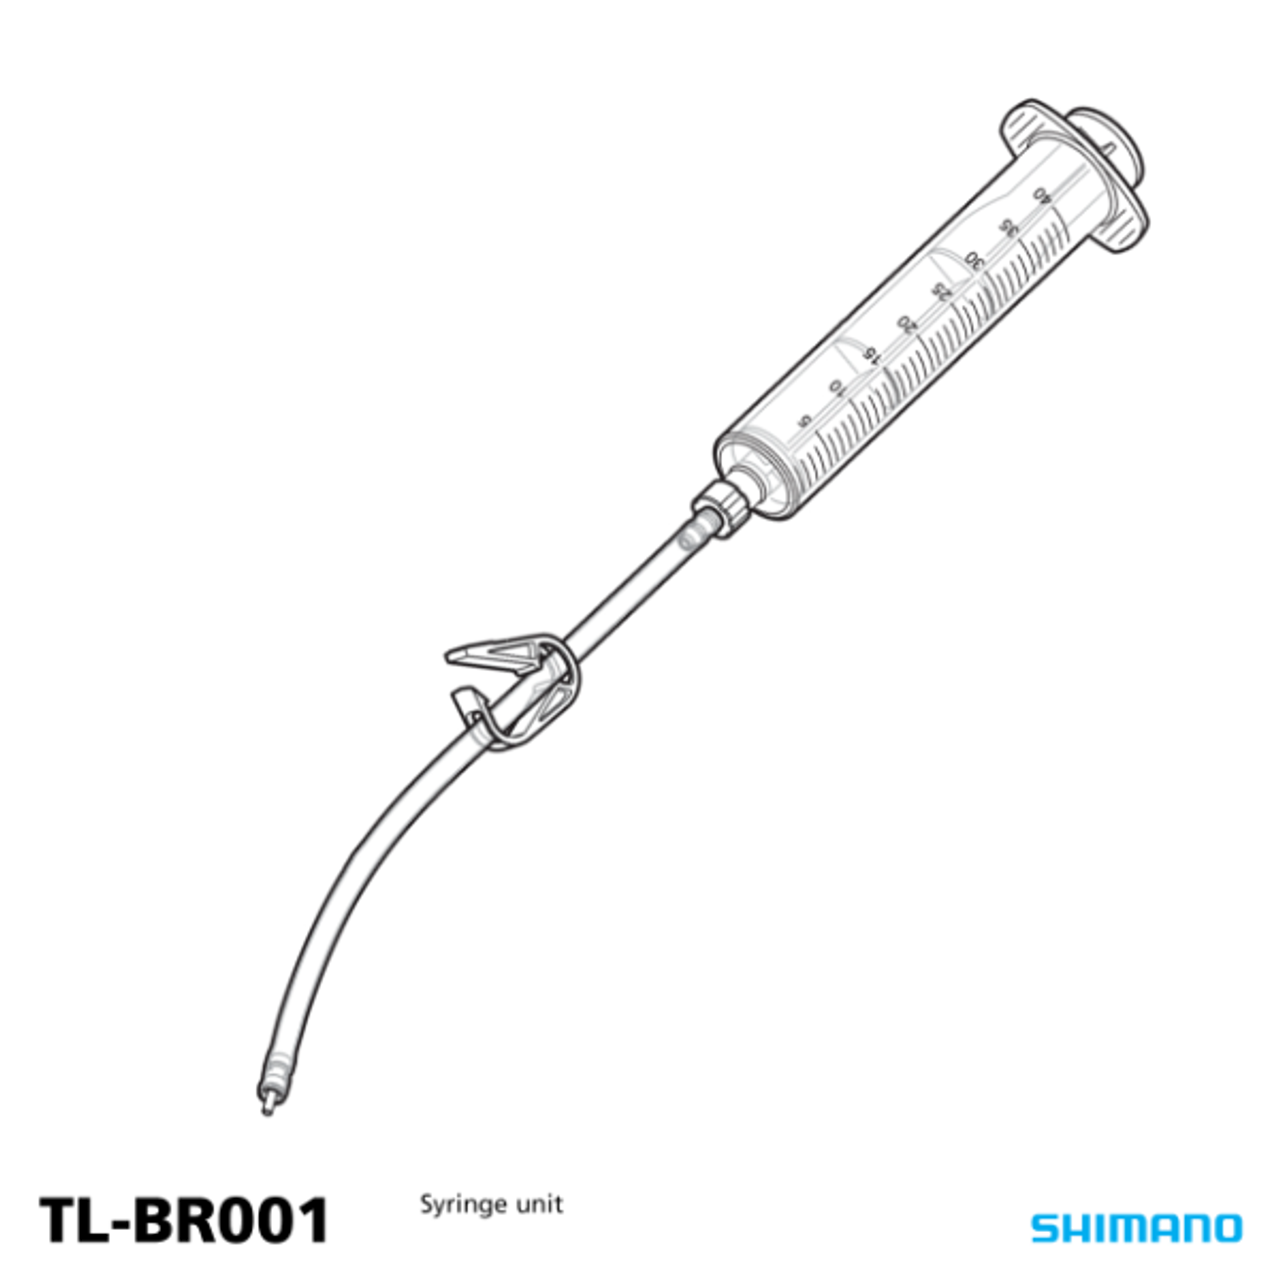 Shimano Syringe Unit TL-BR001